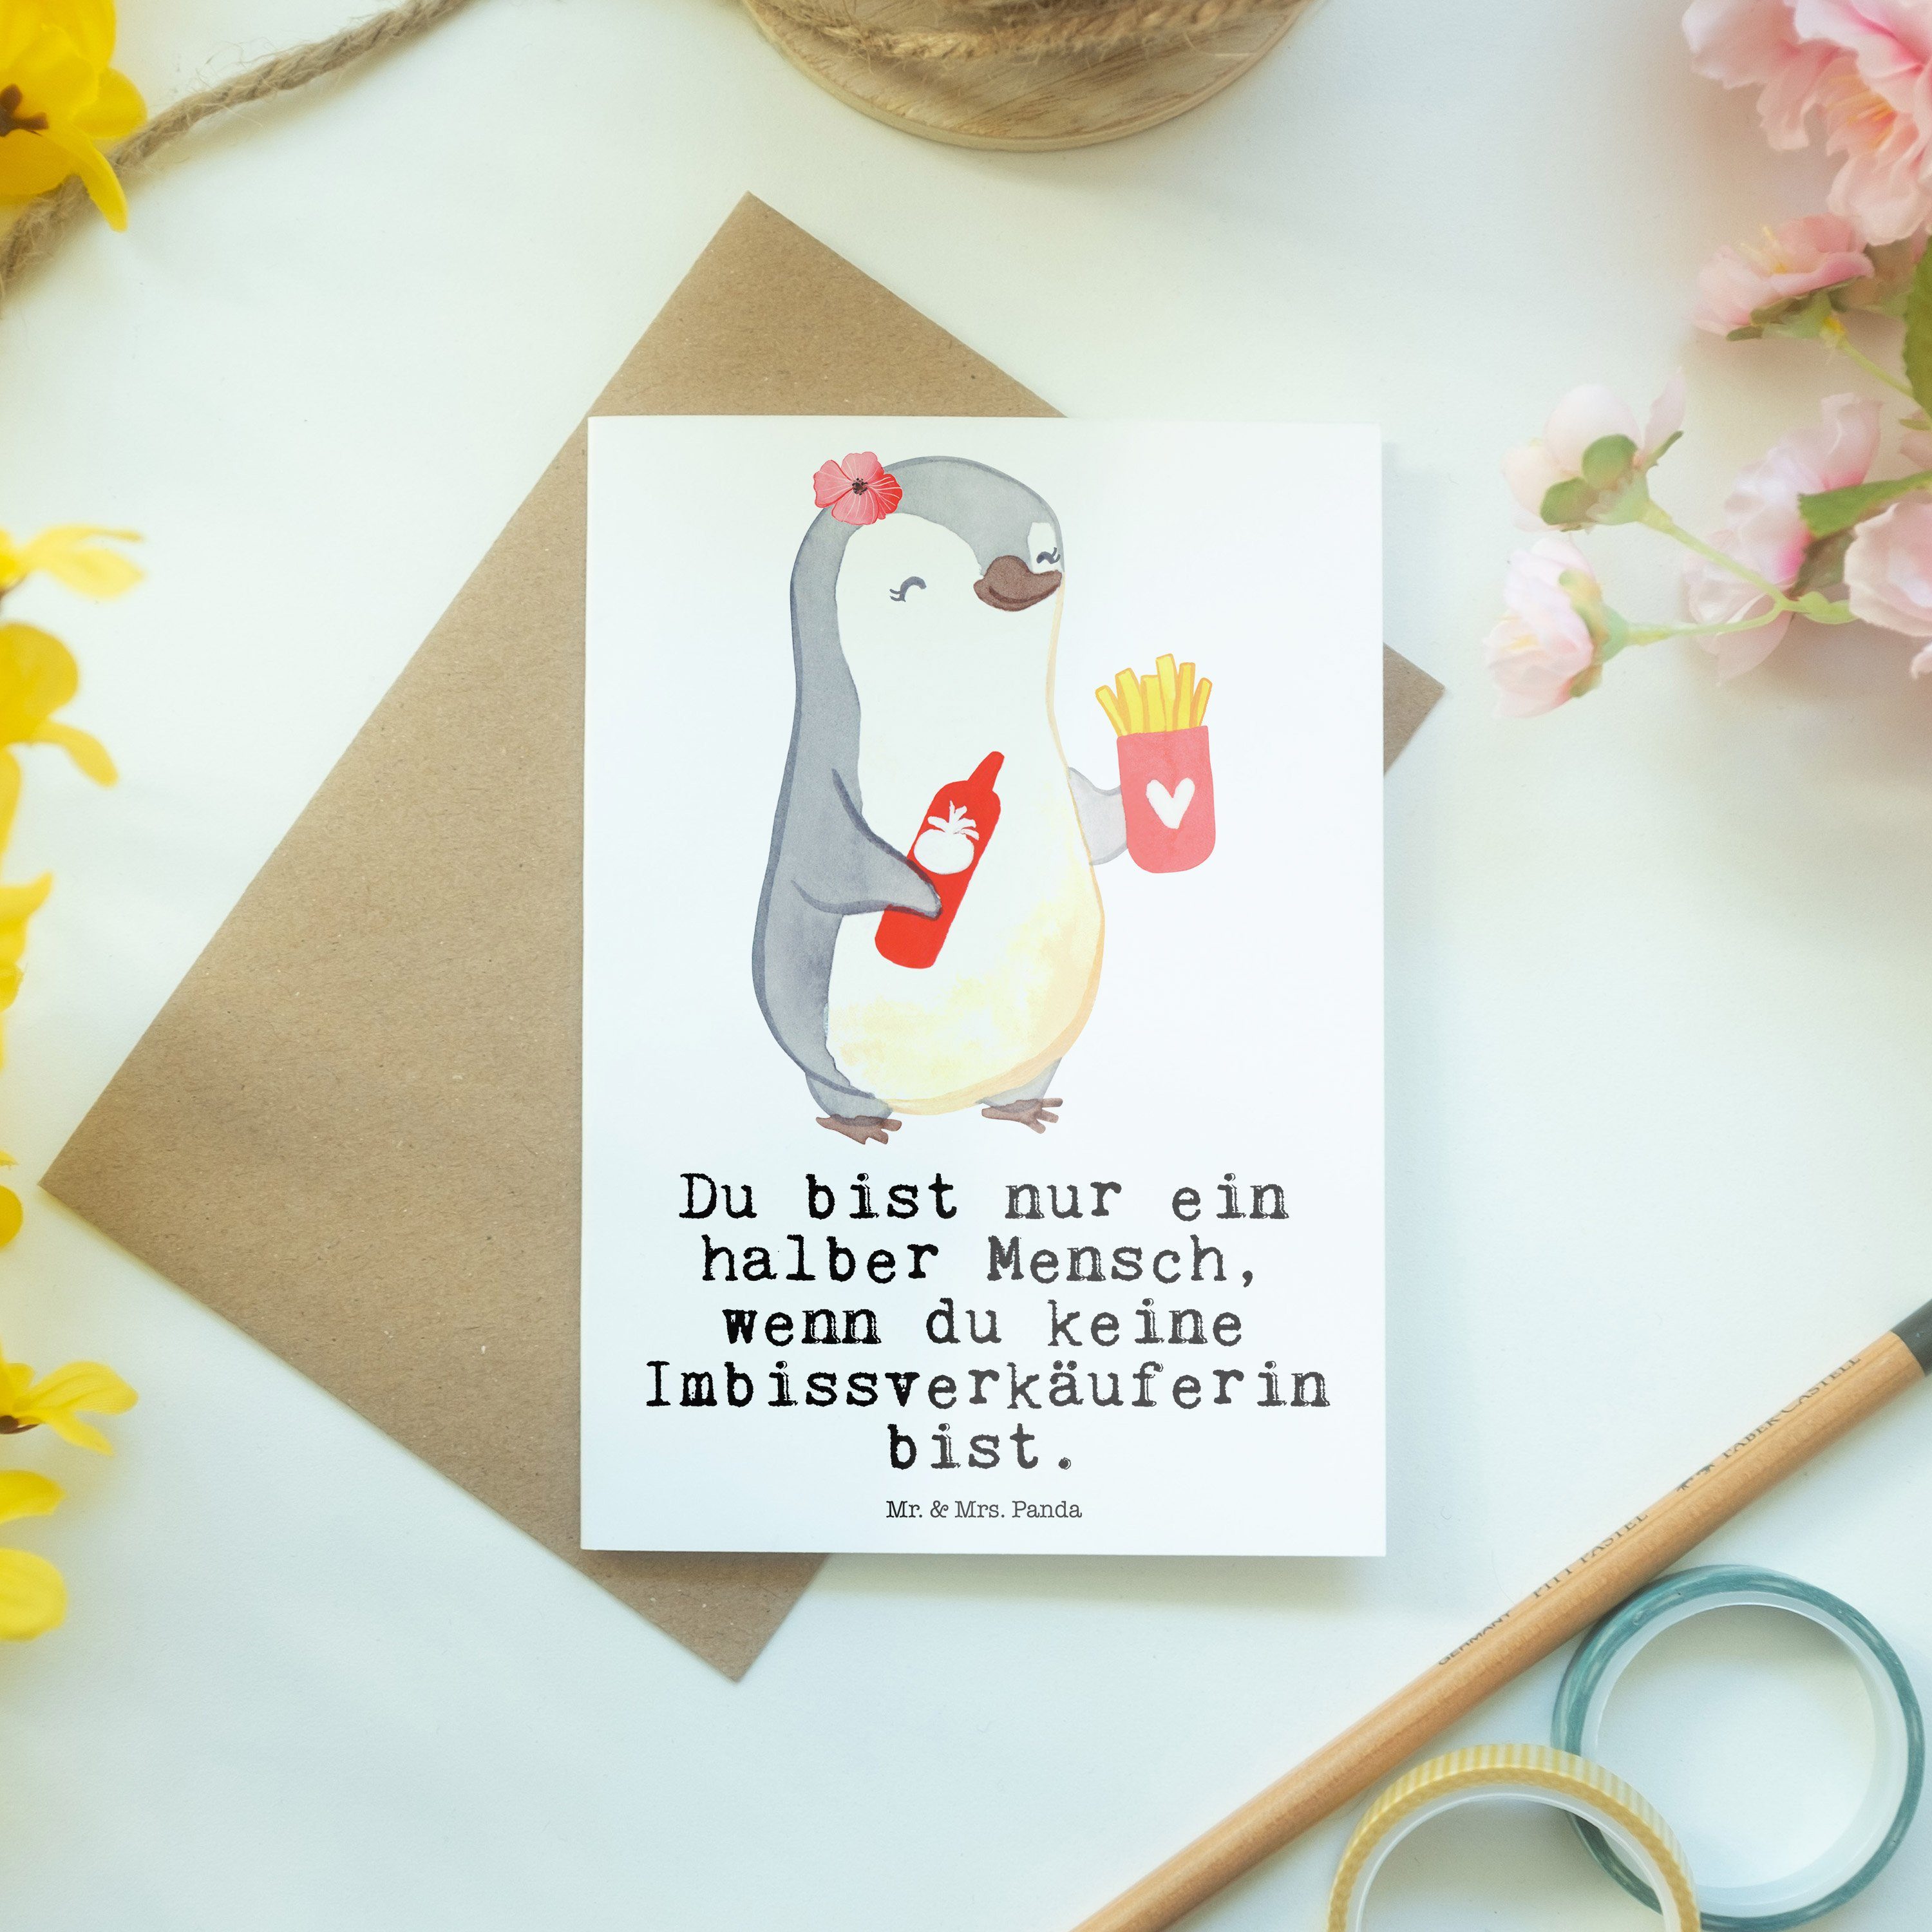 Mr. & Mrs. Panda Weiß Imbissverkäuferin Herz Kol - Grußkarte - Imibissverkäuferin, mit Geschenk